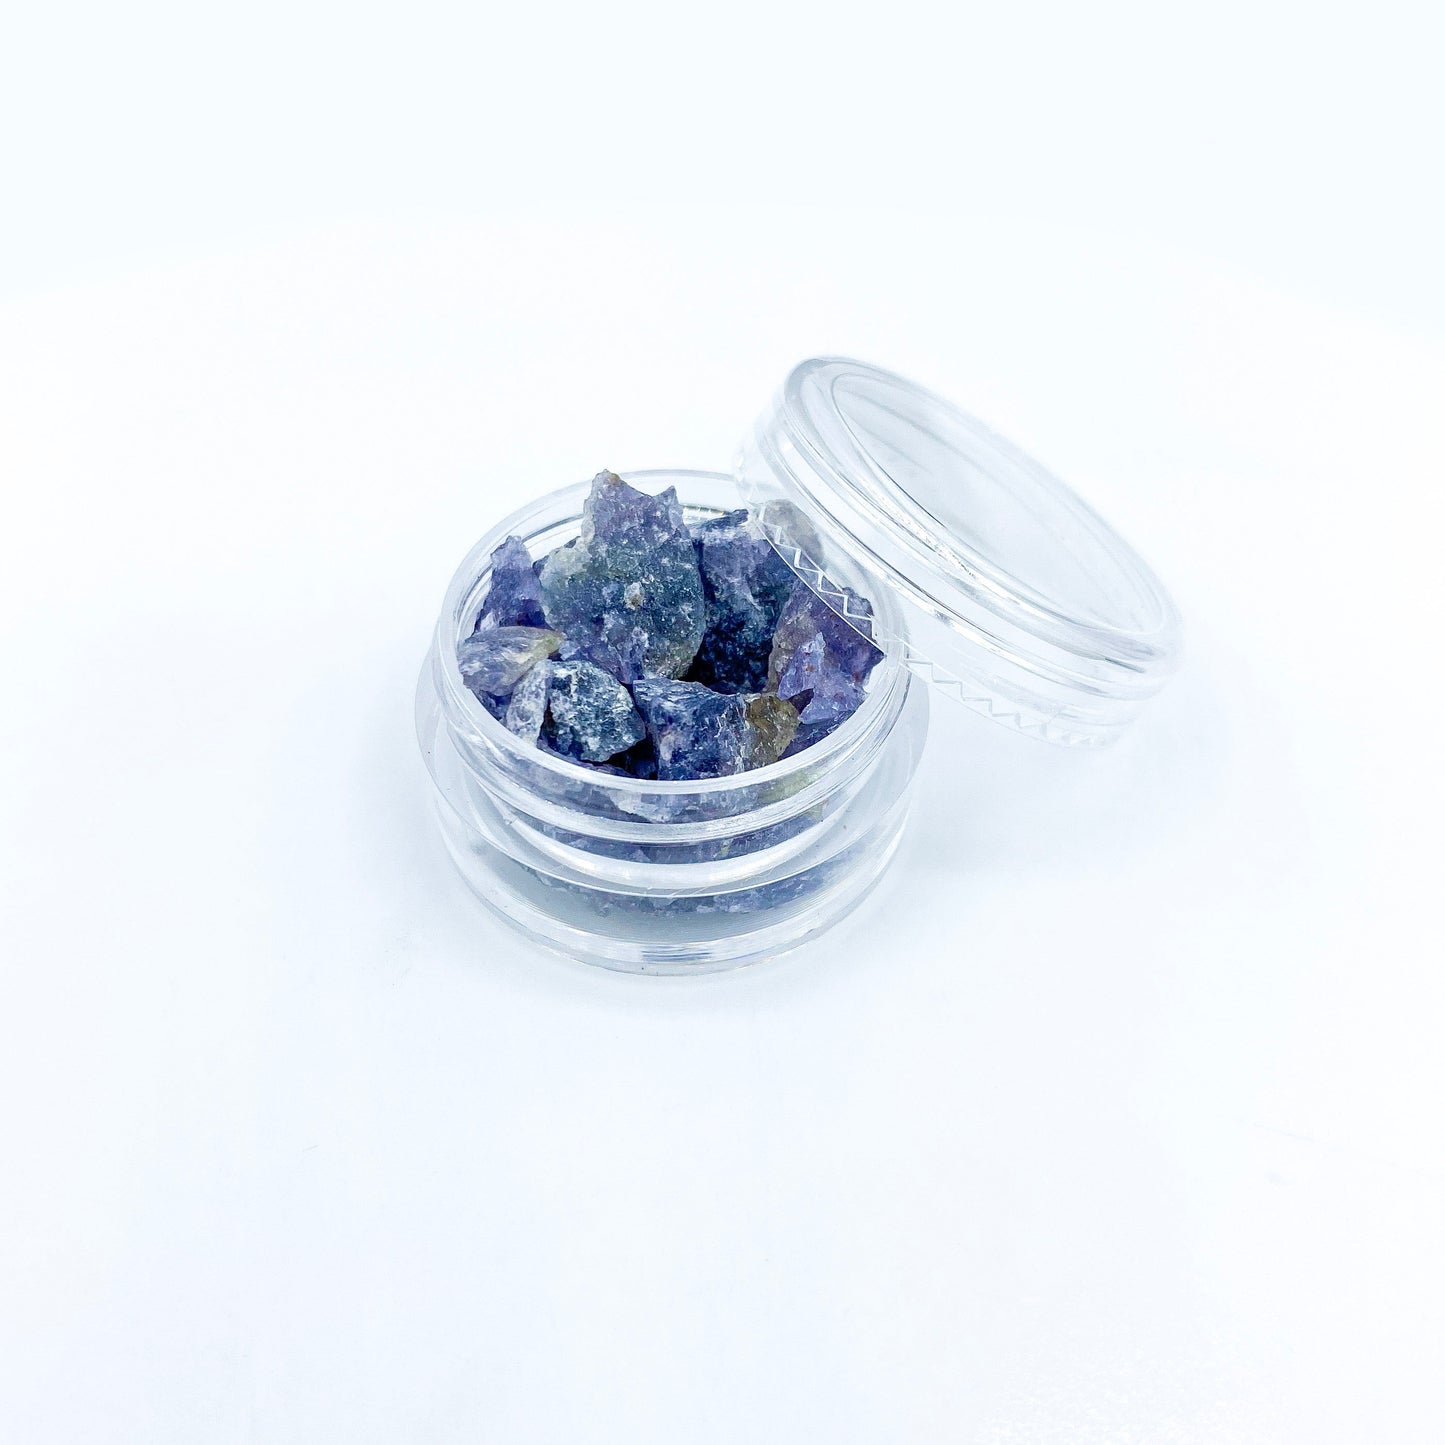 Water Sapphire (Iolite) - Patrick Adair Supplies